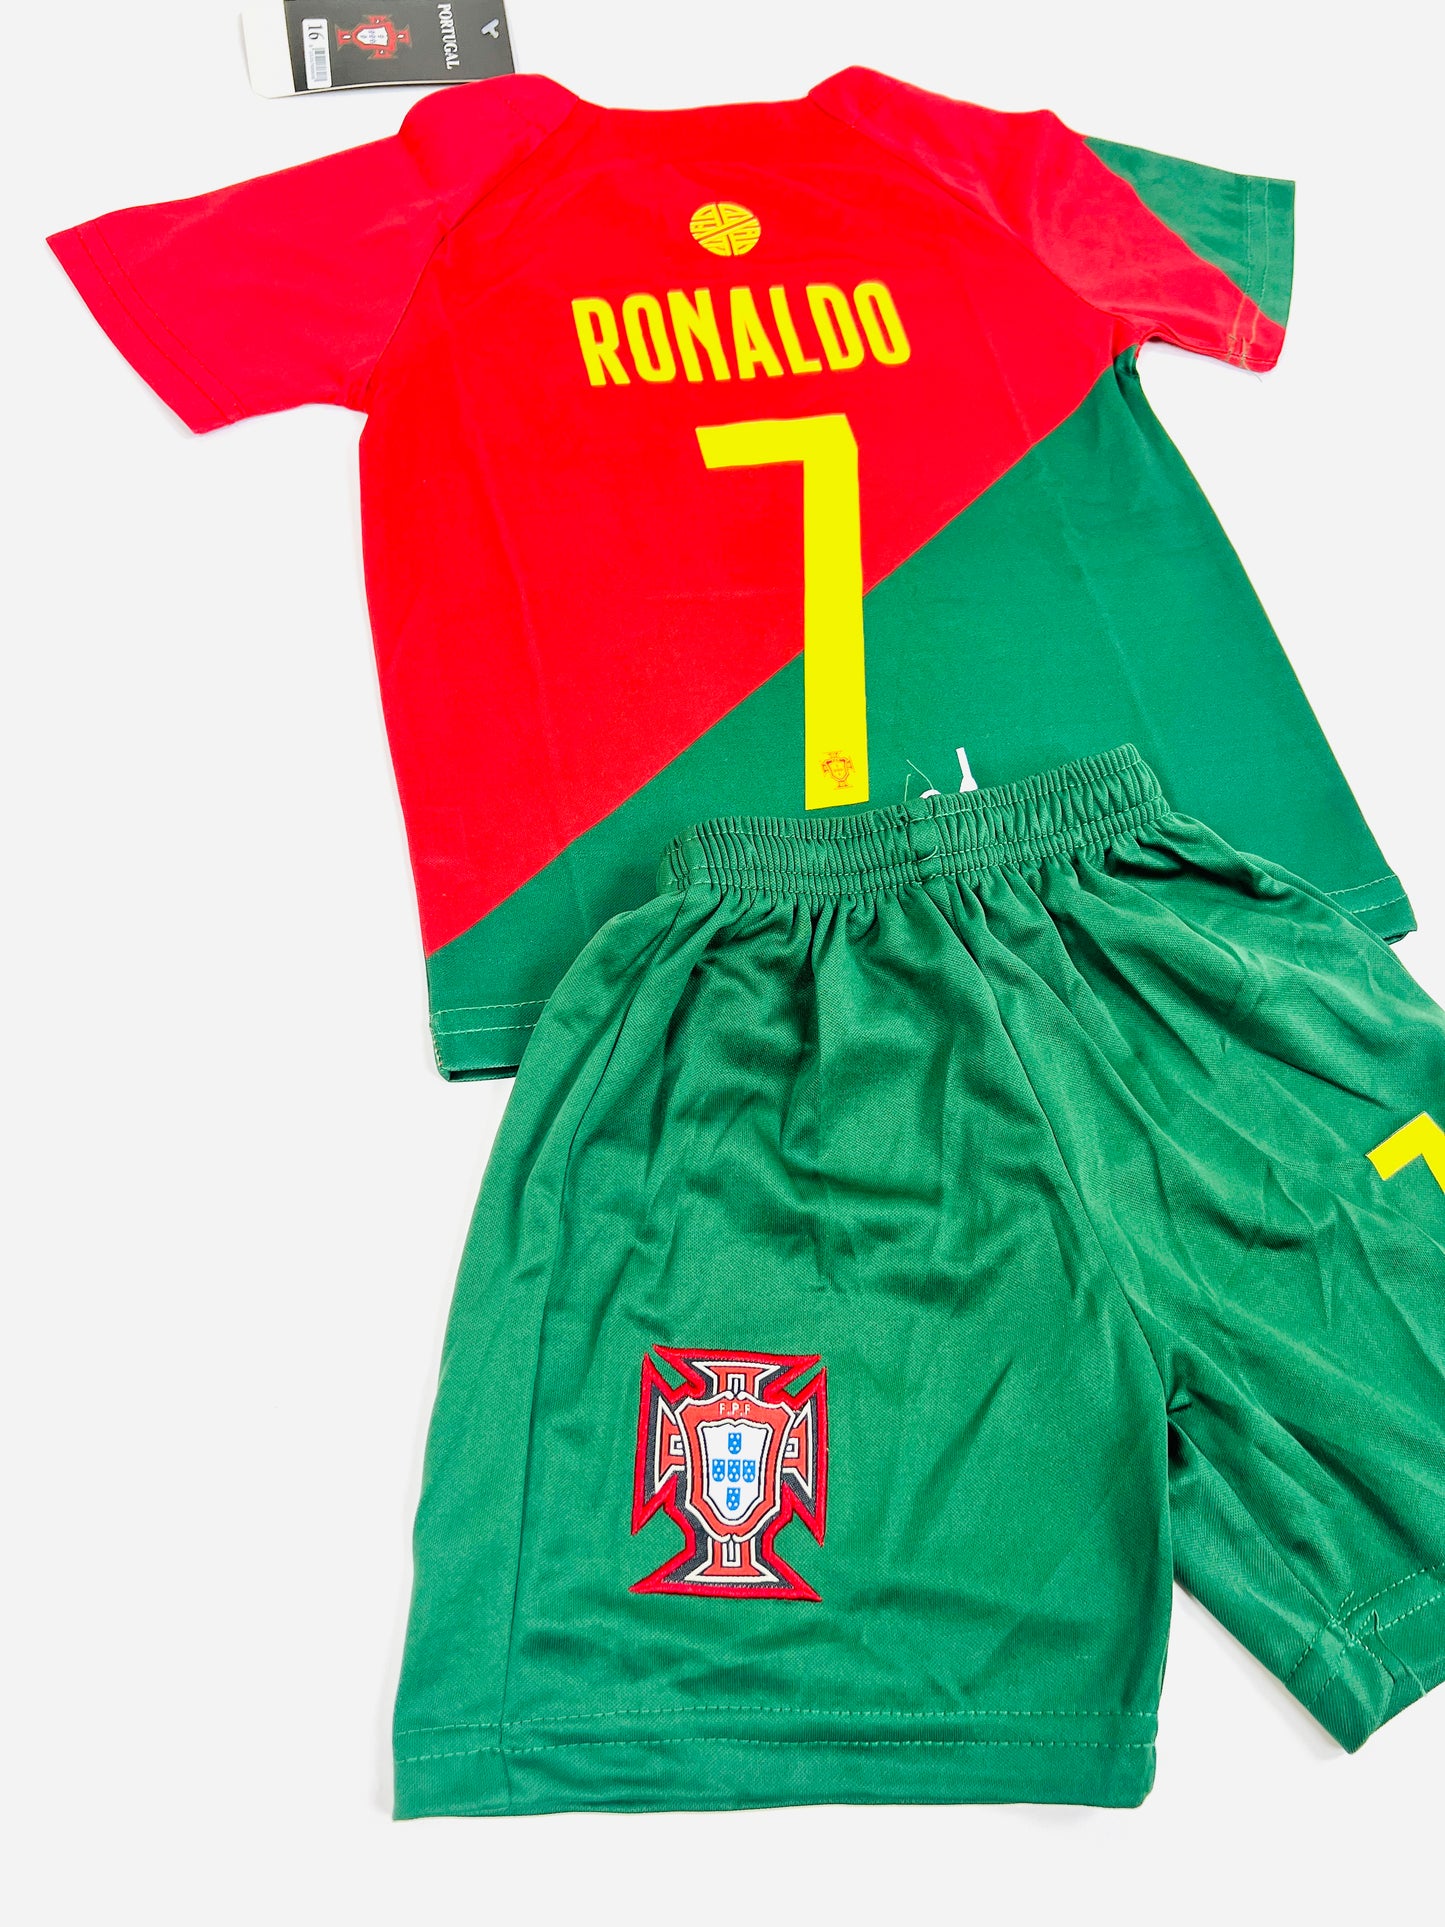 Ronaldo #7 Portugal Home Youth soccer set